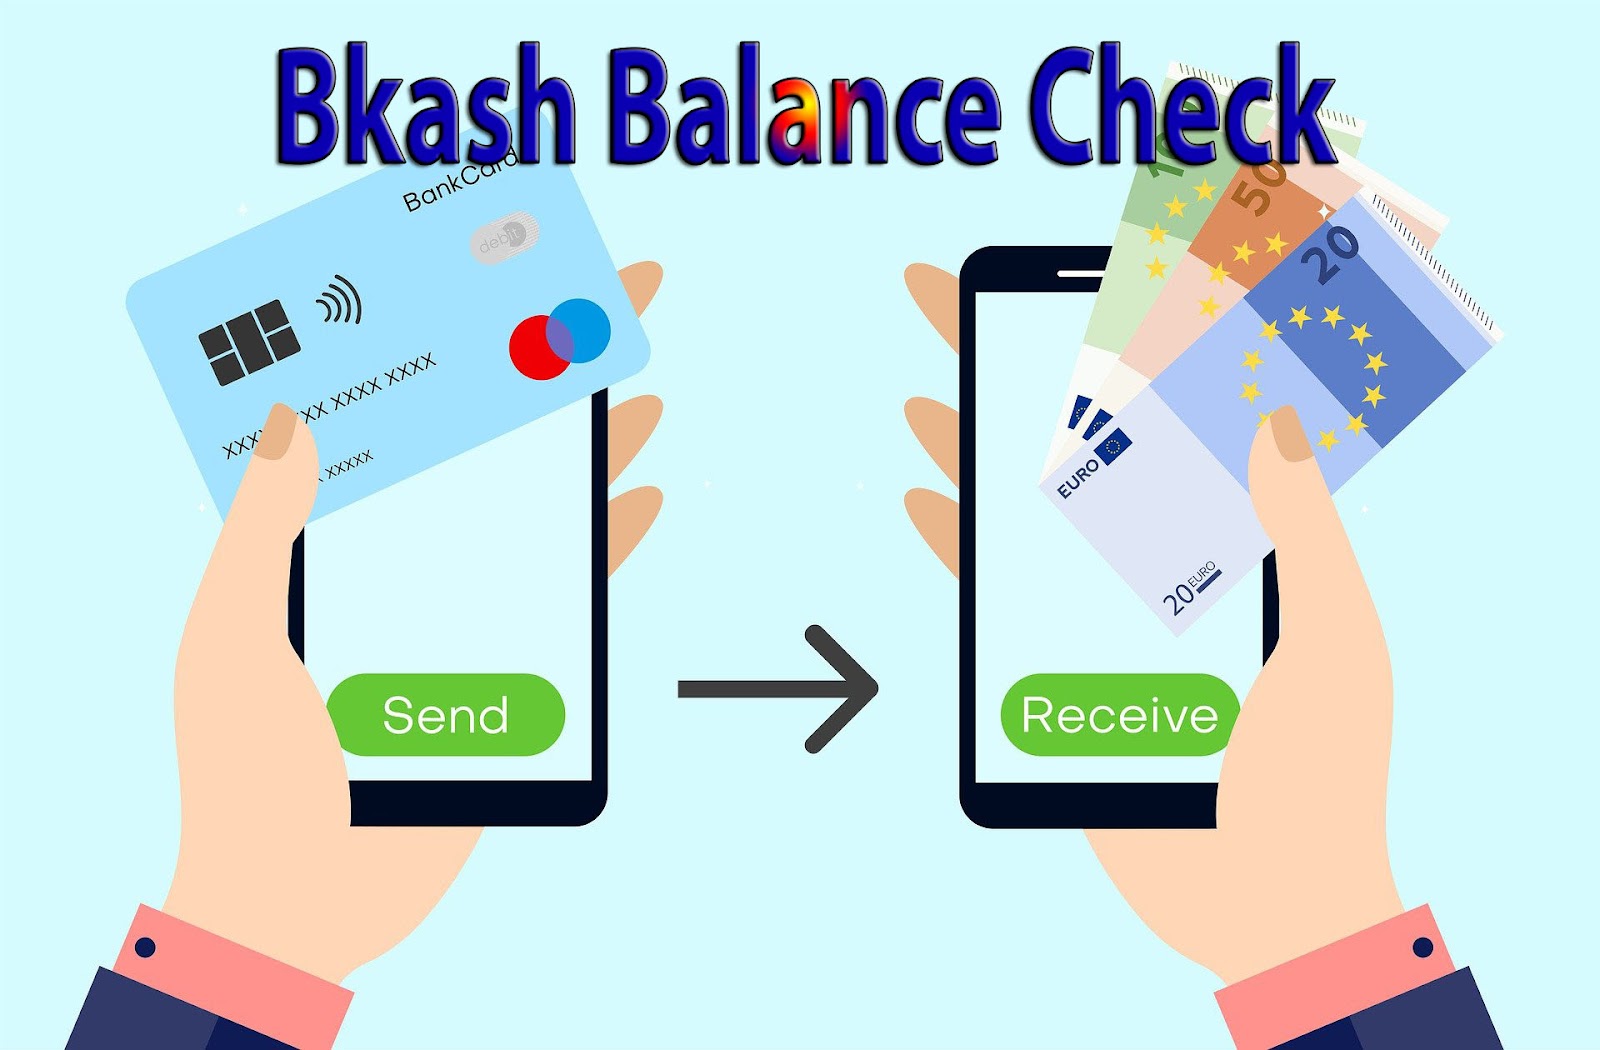 Bkash Balance Check